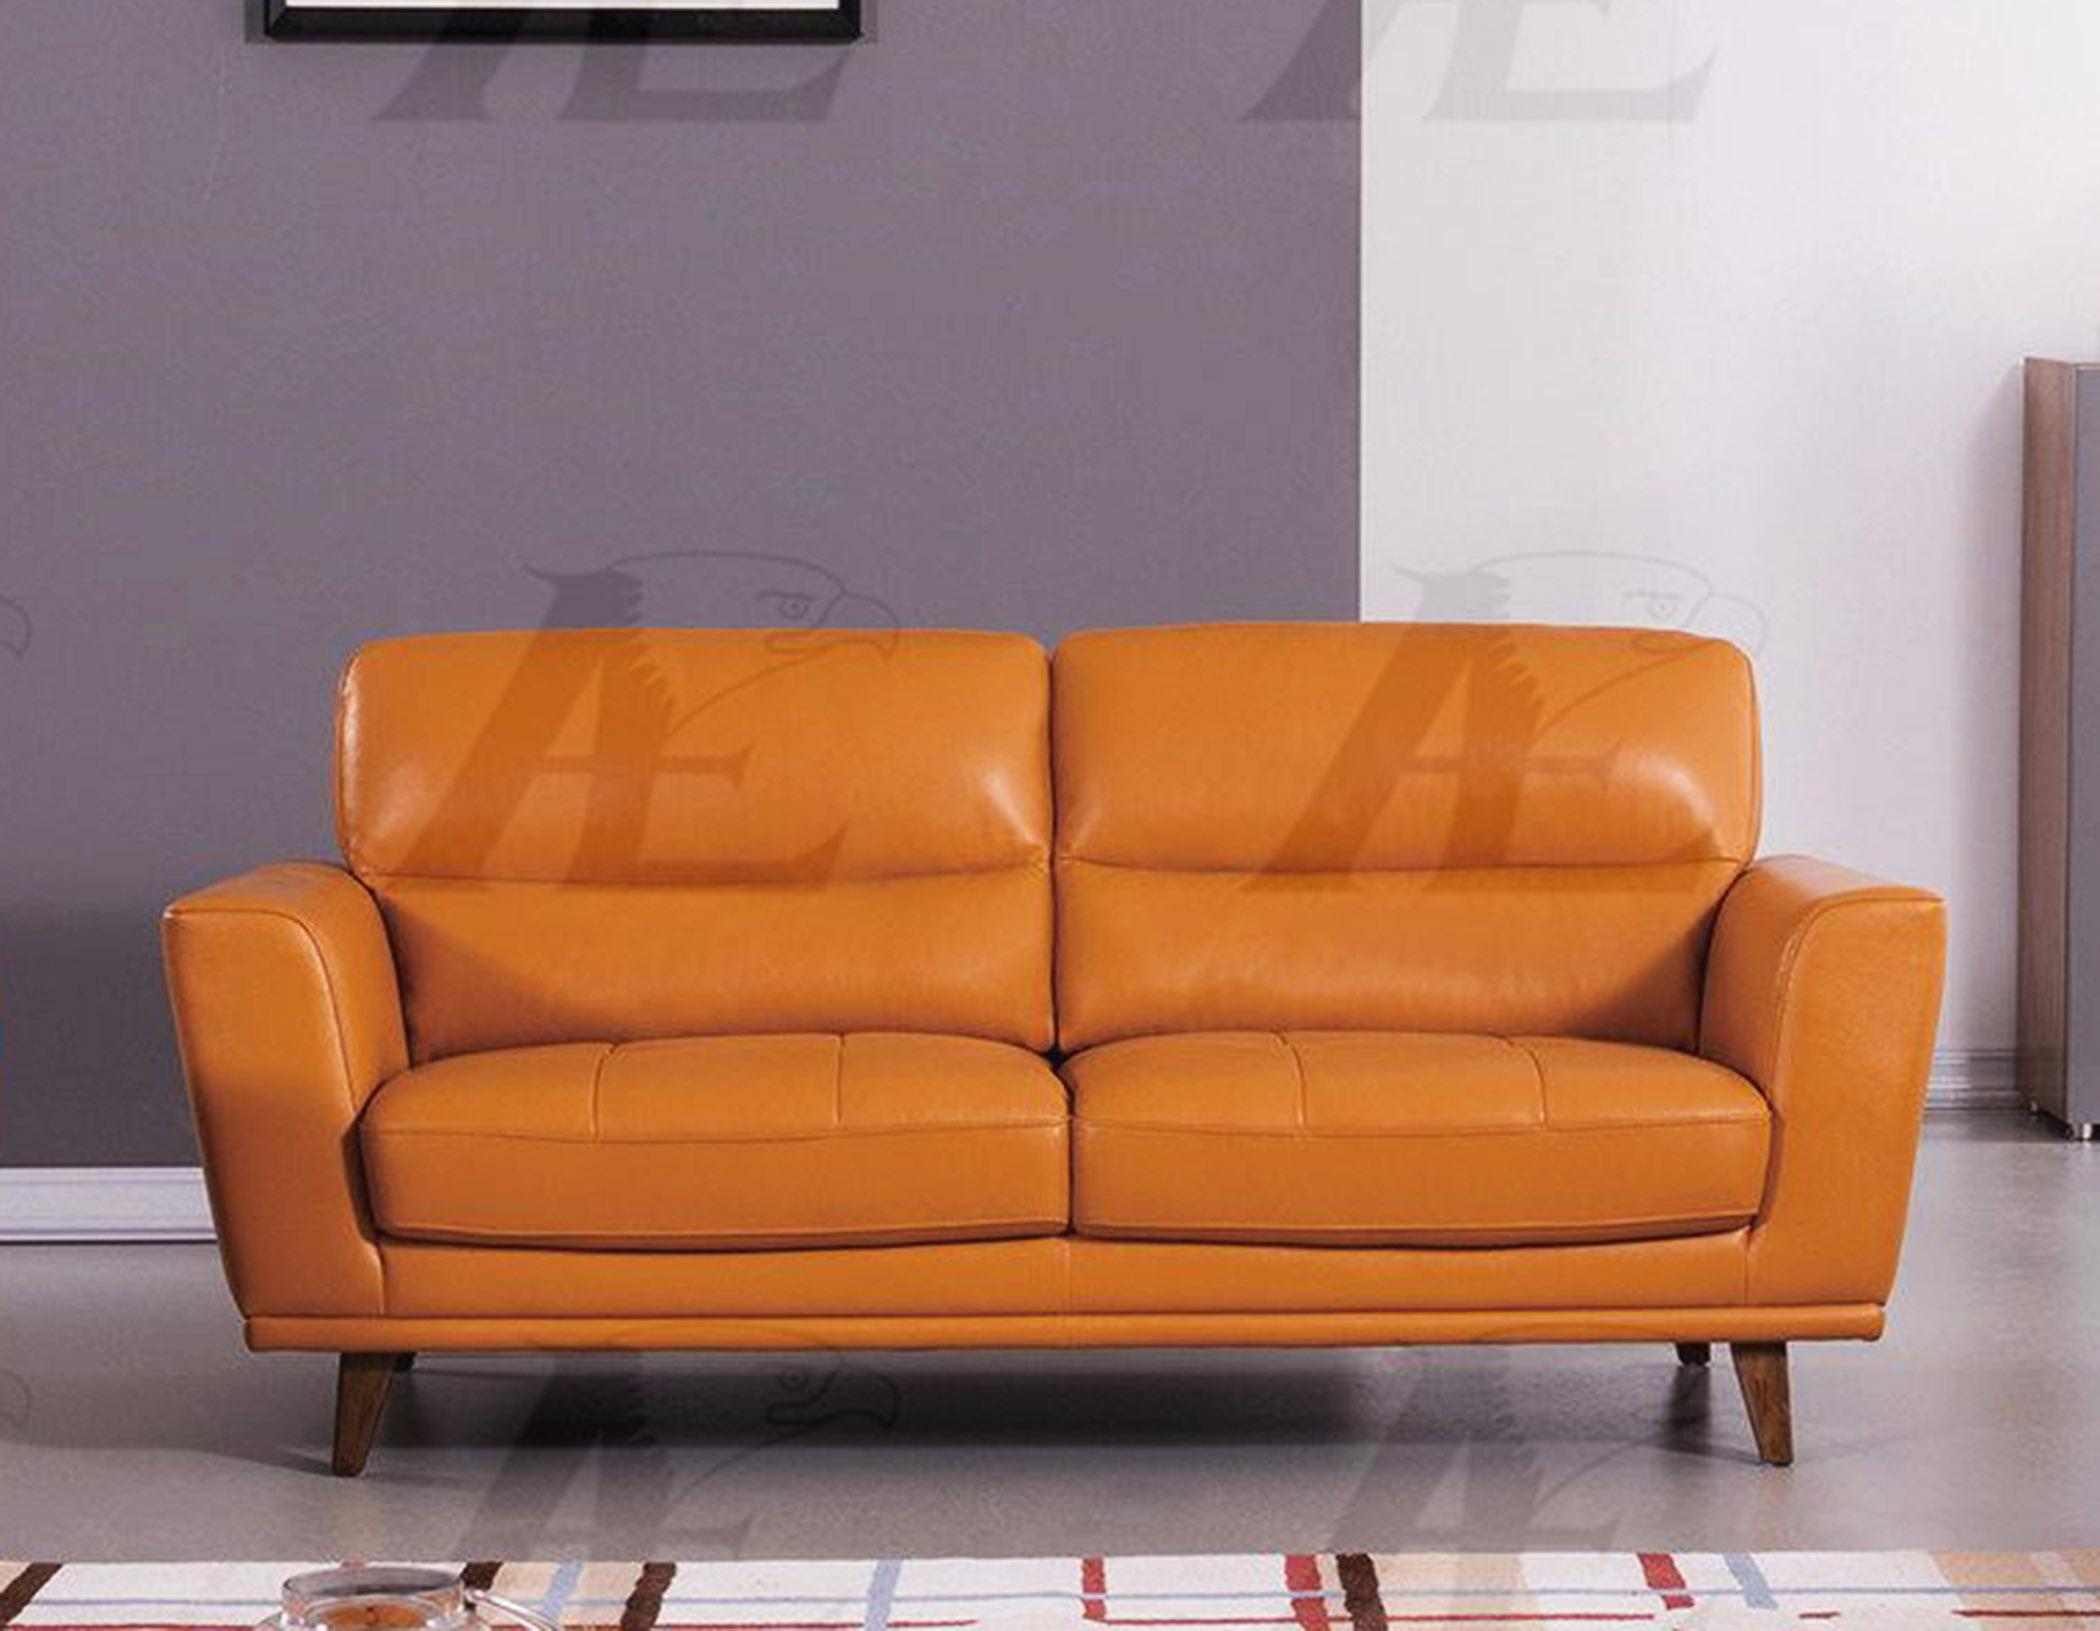 

    
American Eagle Furniture EK082-ORG Orange Sofa and Loveseat Set Italian Leather 2Pcs
